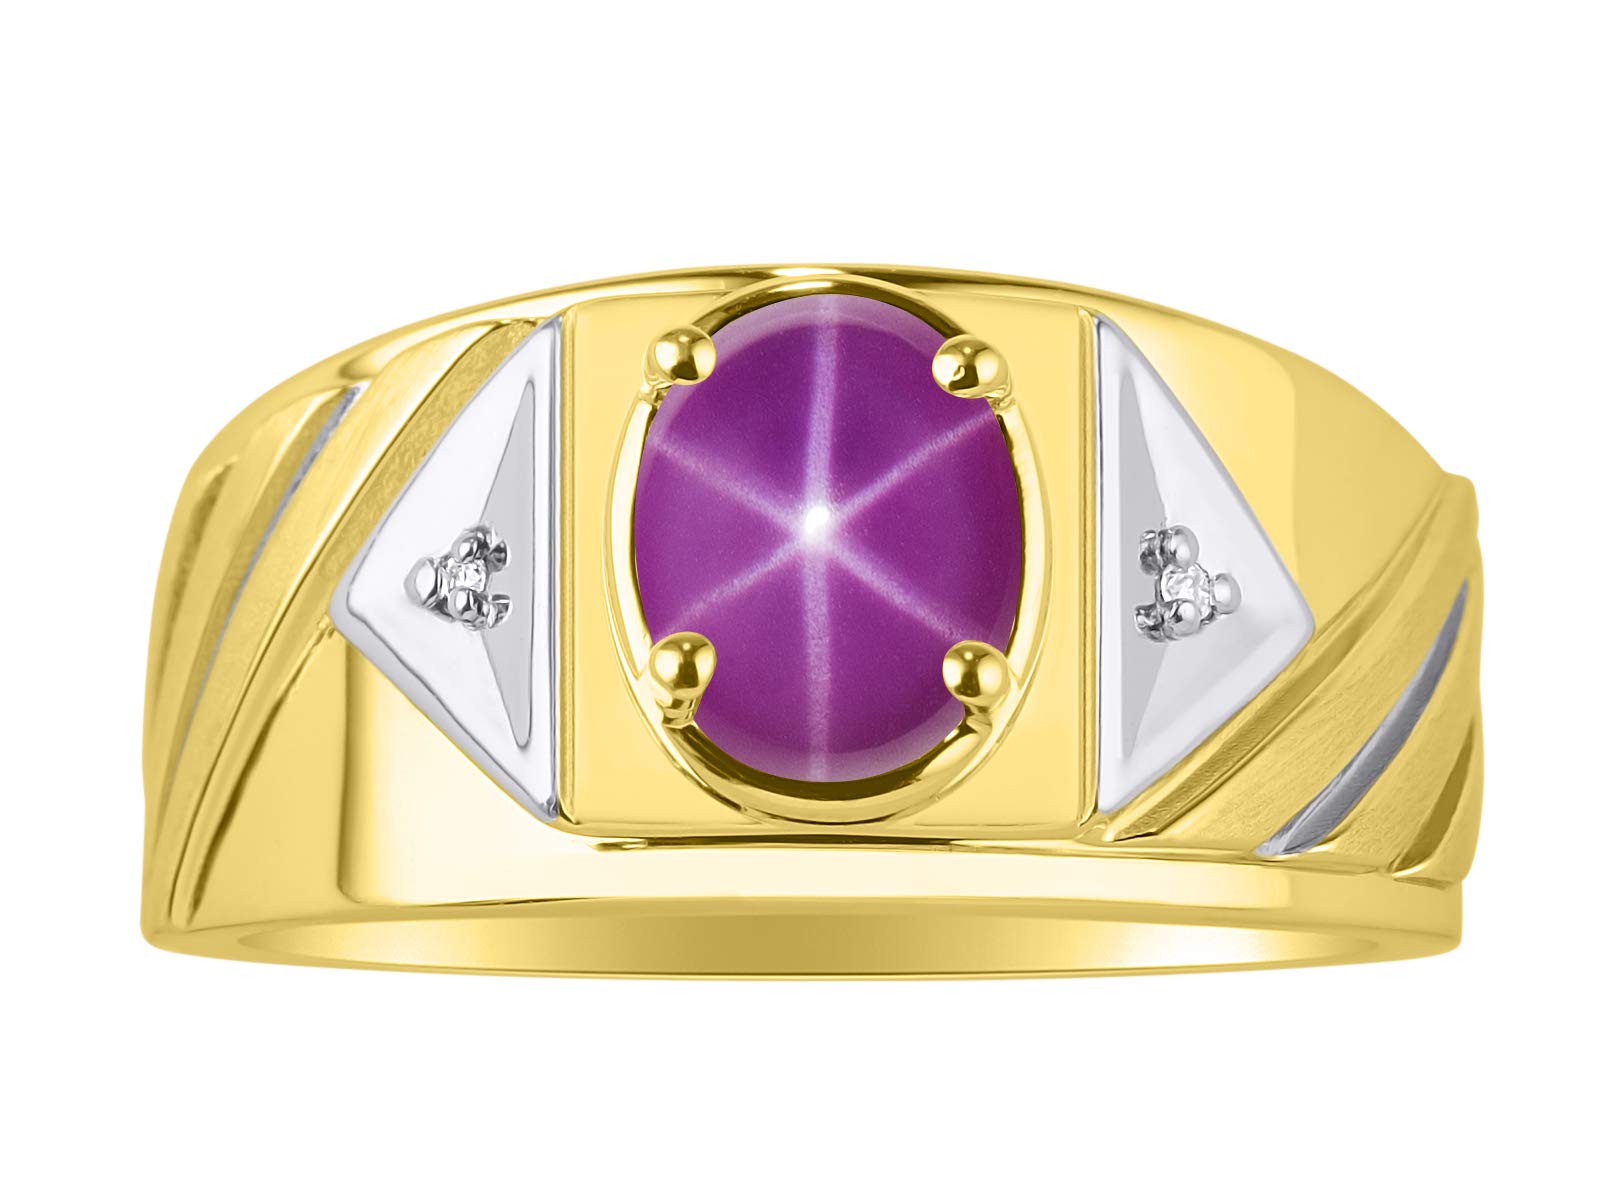 Rylos Mens Rings 14K Yellow Gold Rings Classic Designer Style 8X6MM Oval Gemstone & Genuine Sparkling Diamond Ring Color Stone Birthstone Rings For Men, Men's Rings, Gold Rings Sizes 8,9,10,11,12,13